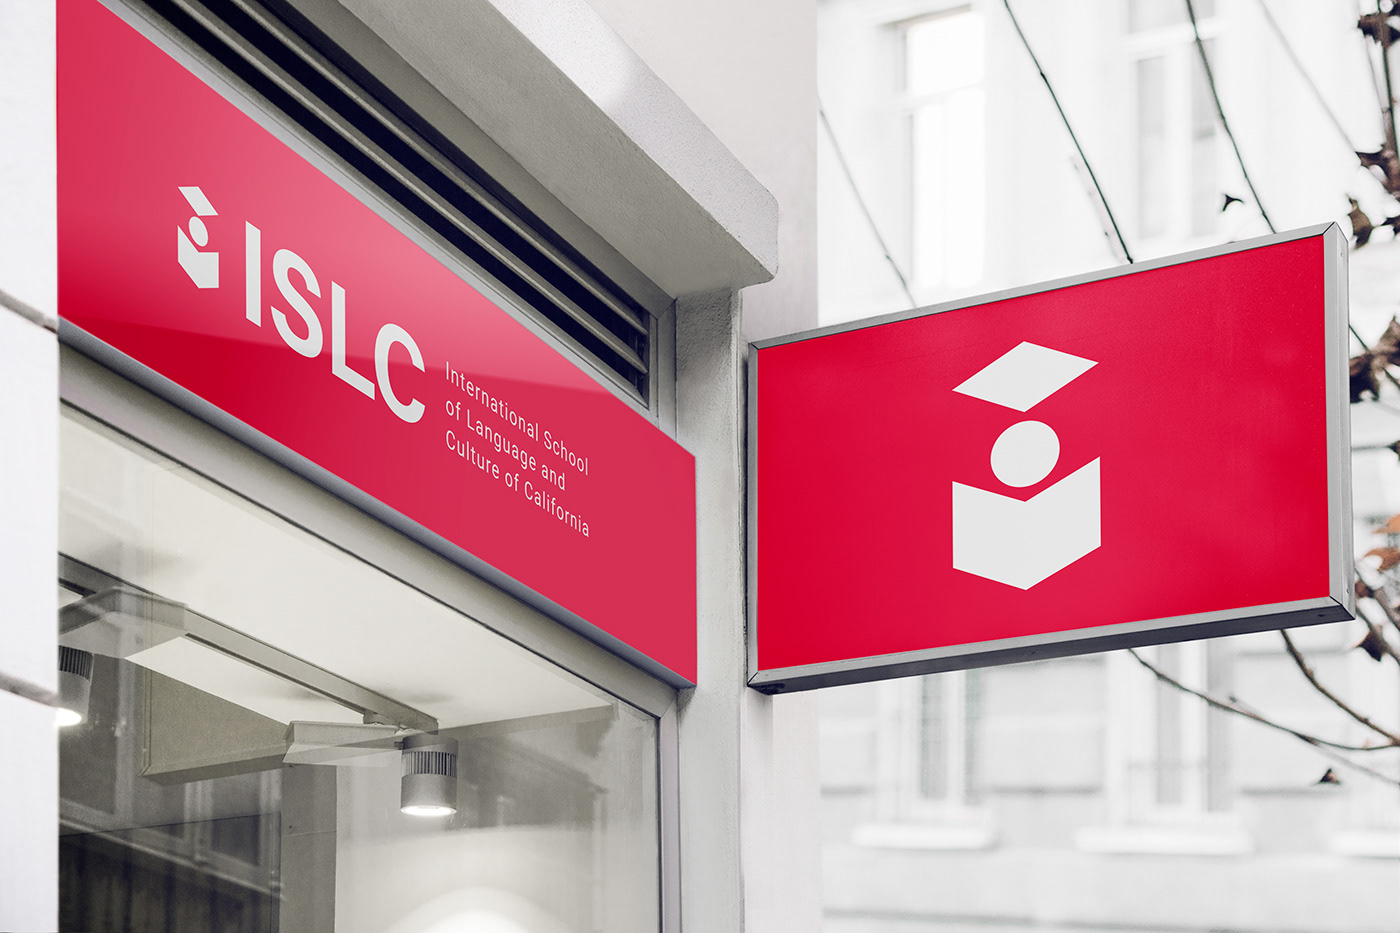 brand identity branding  Education islc language center language school learning